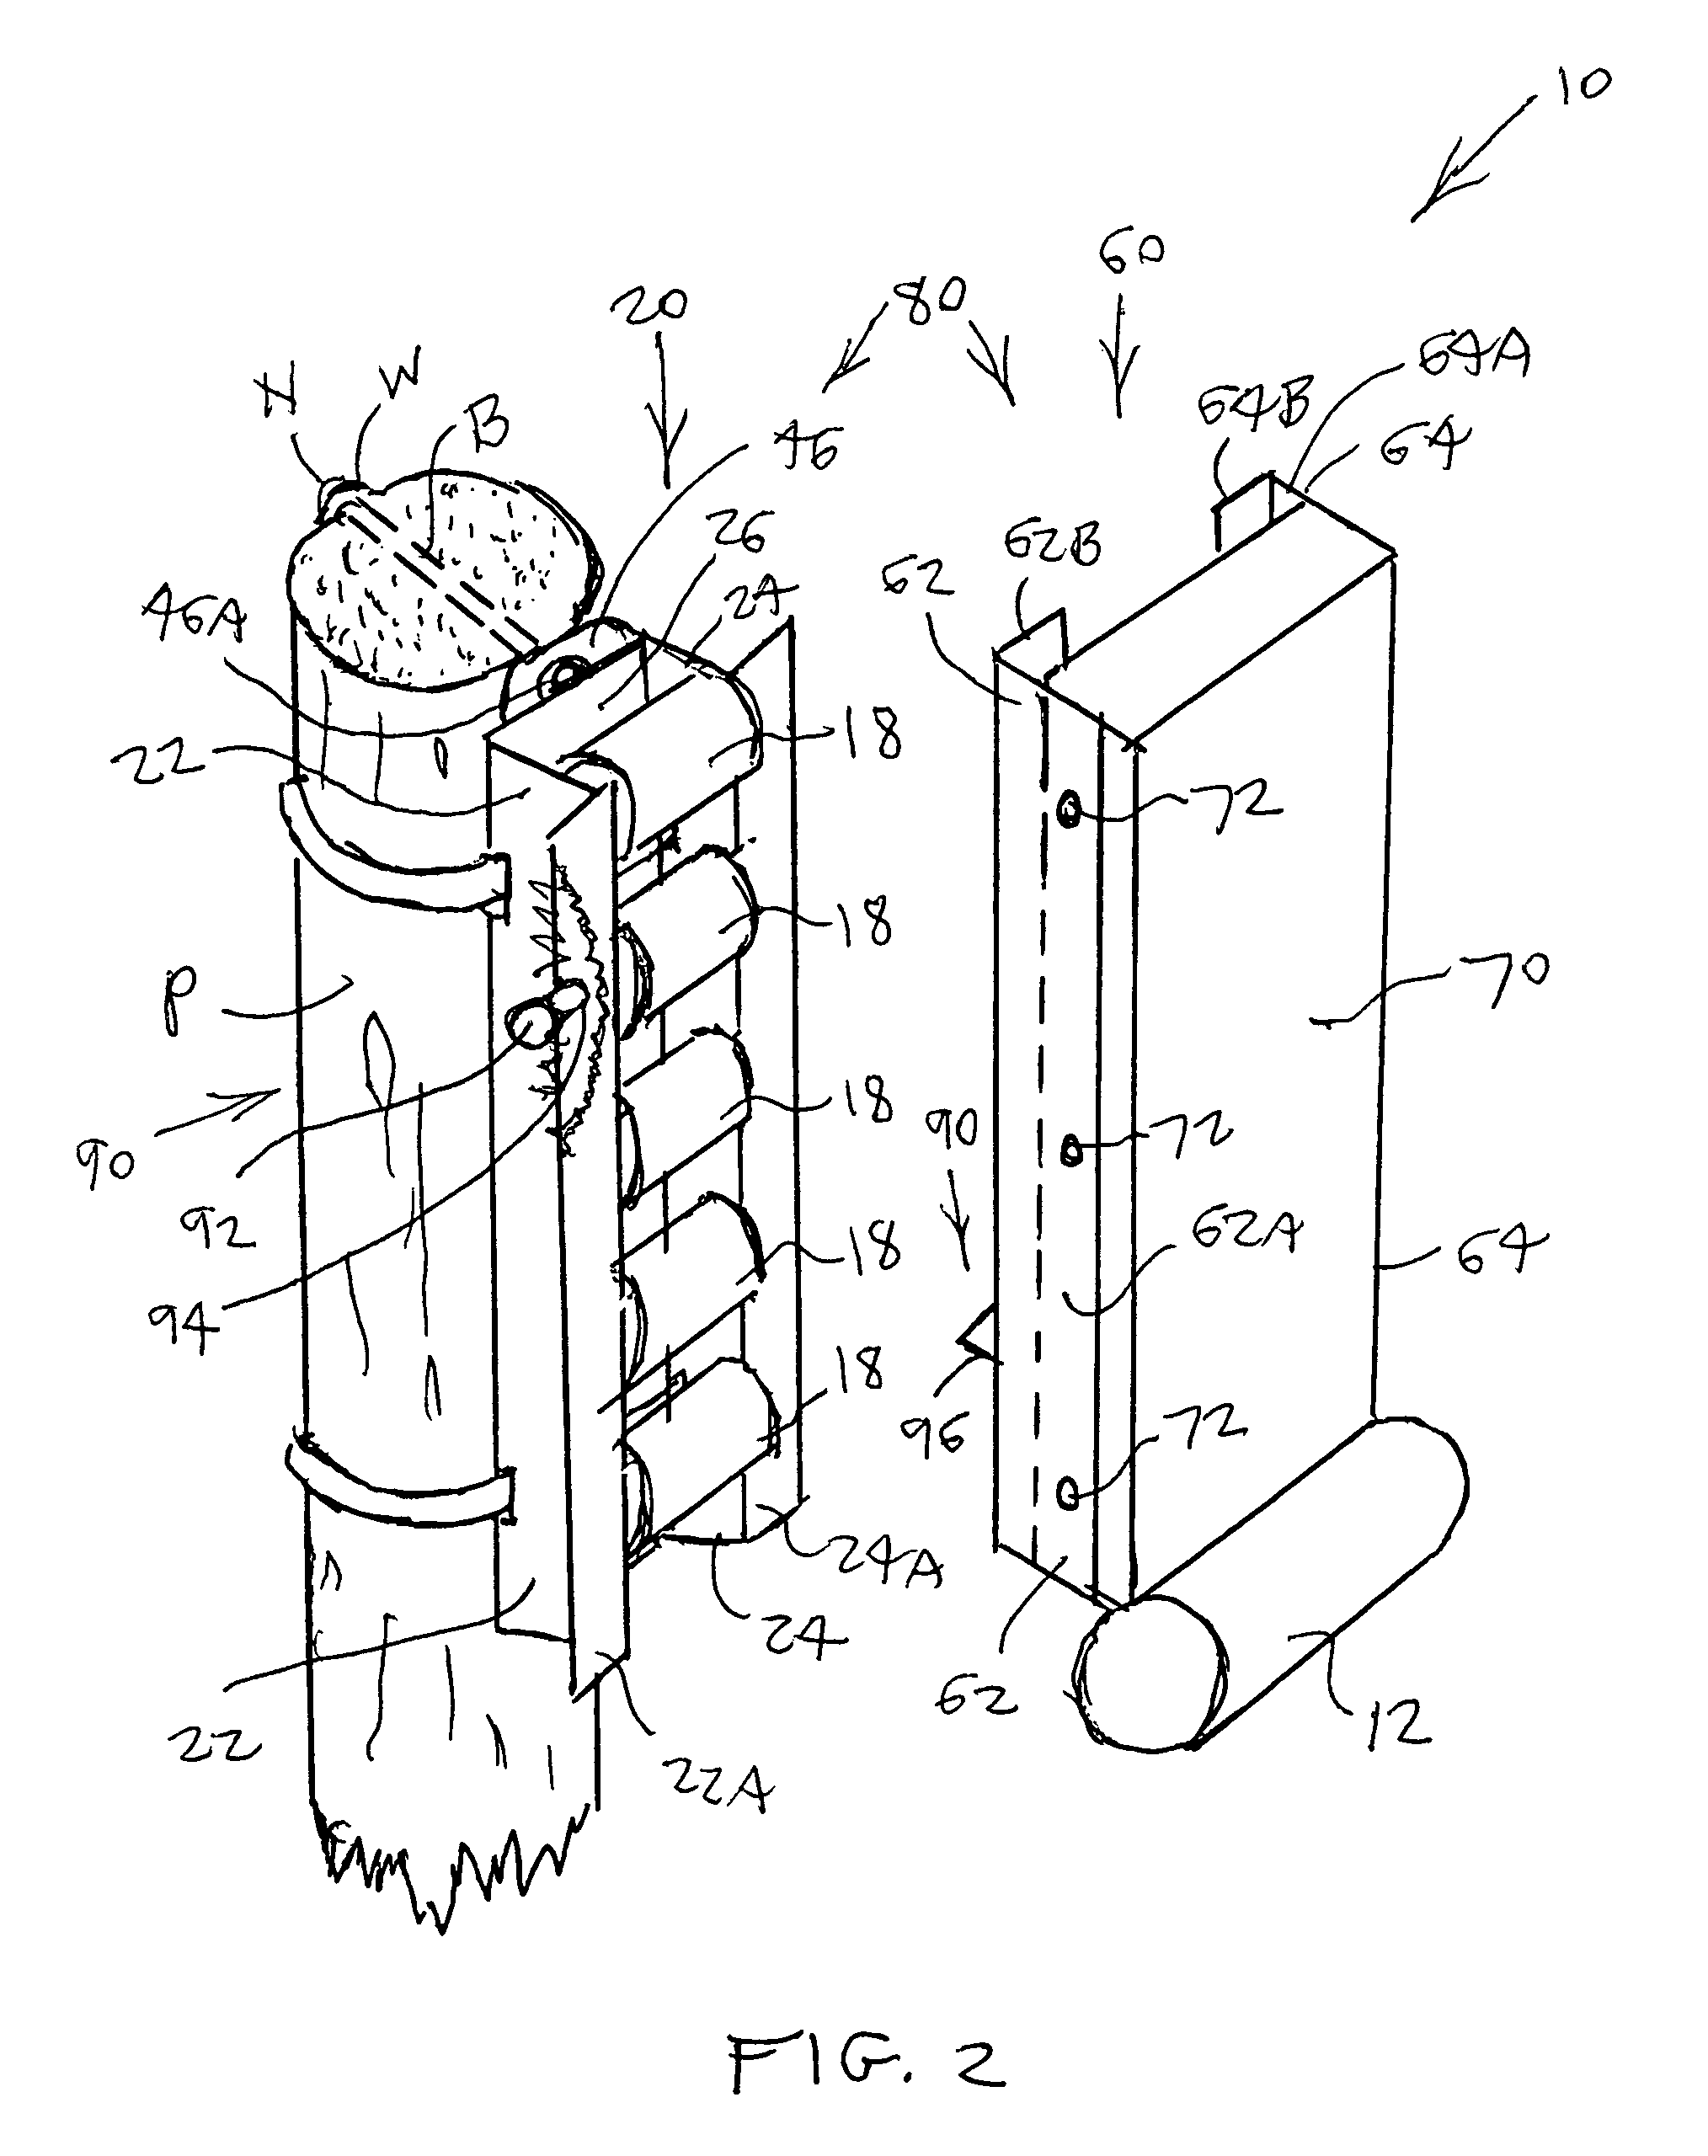 Buoyant bumper apparatus for absorbing water vessel impact against pilings